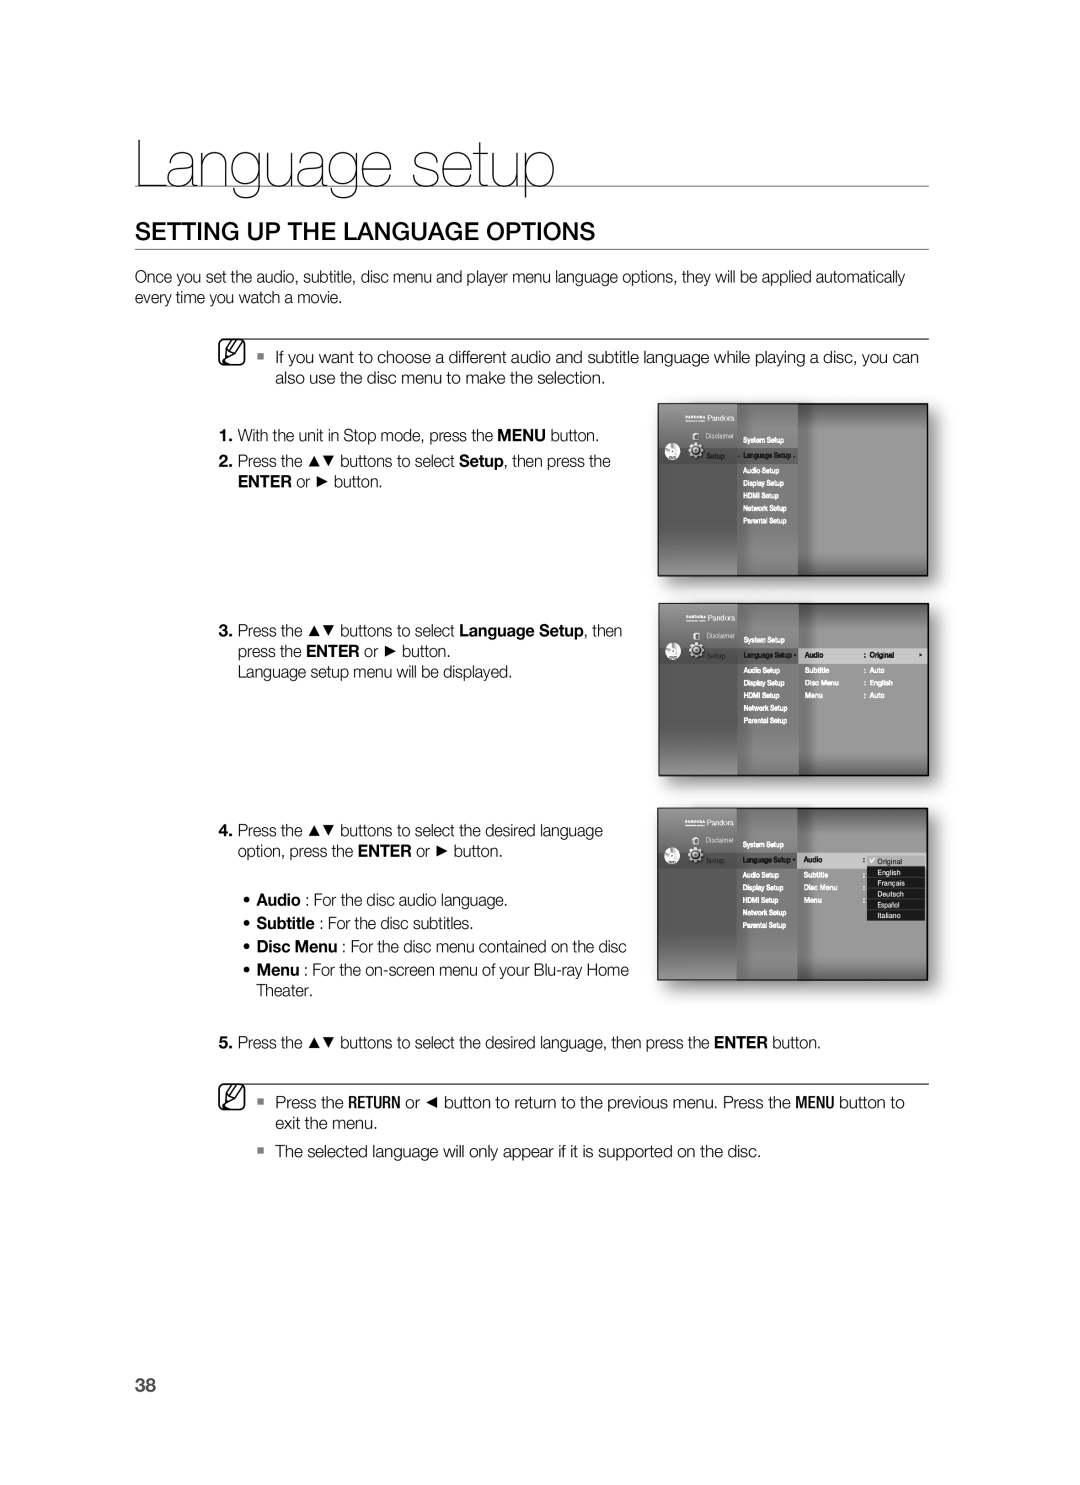 Samsung AH68-02178Z, HT-BD1200 Language setup, Setting Up The Language Options, Audio For the disc audio language 